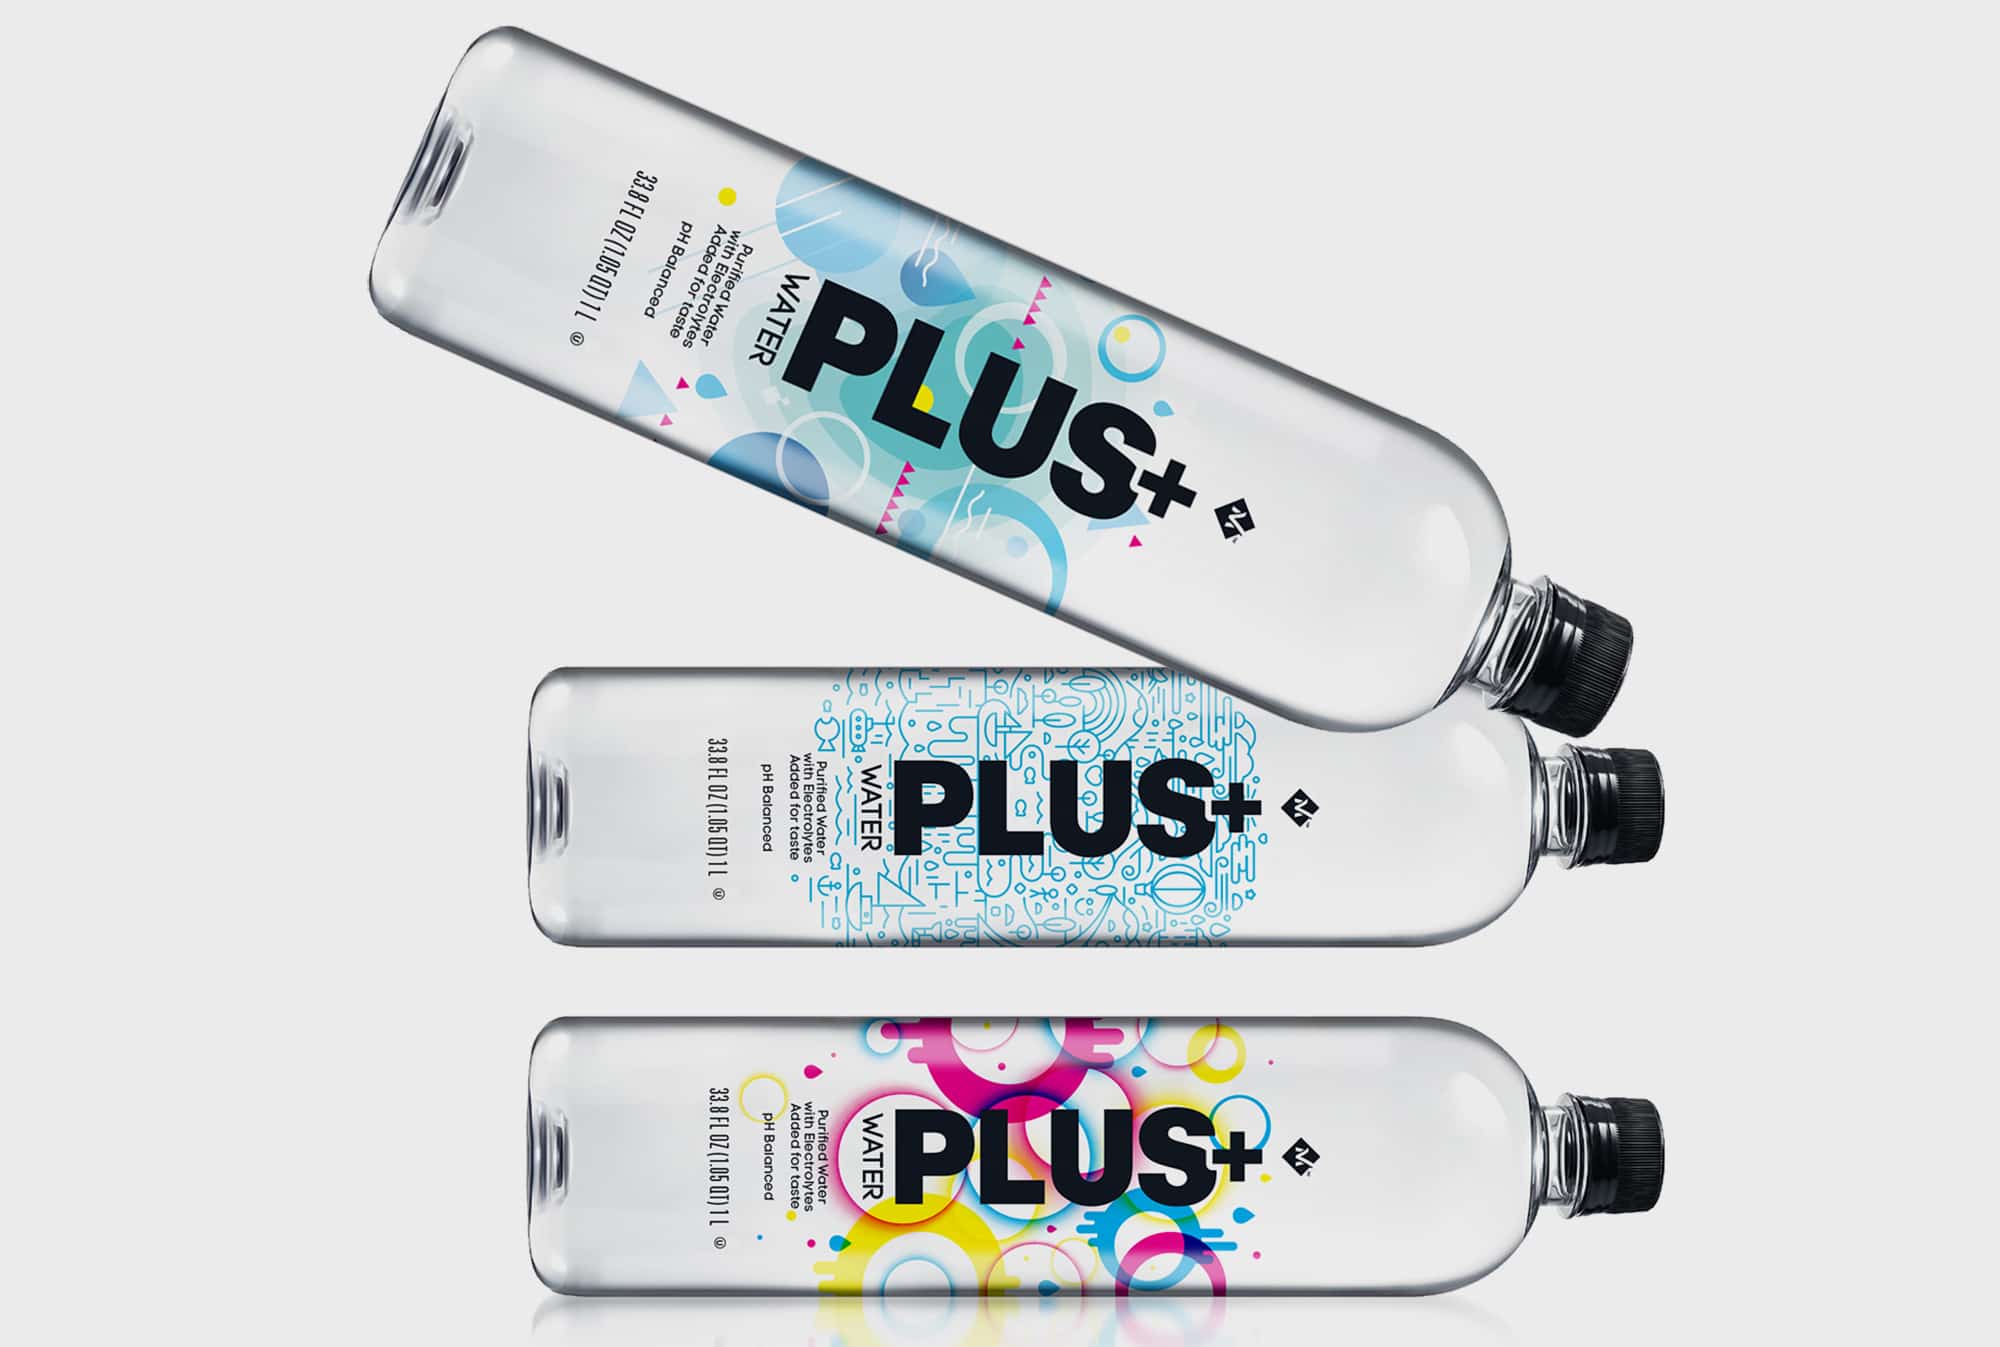 Enhanced PLUS+ Water BY Jonathan Stiers, senior creative director, Sam’s Club; Carrie Mapes, account lead, Equator Design; Josh Weigelt, designer, Equator Design